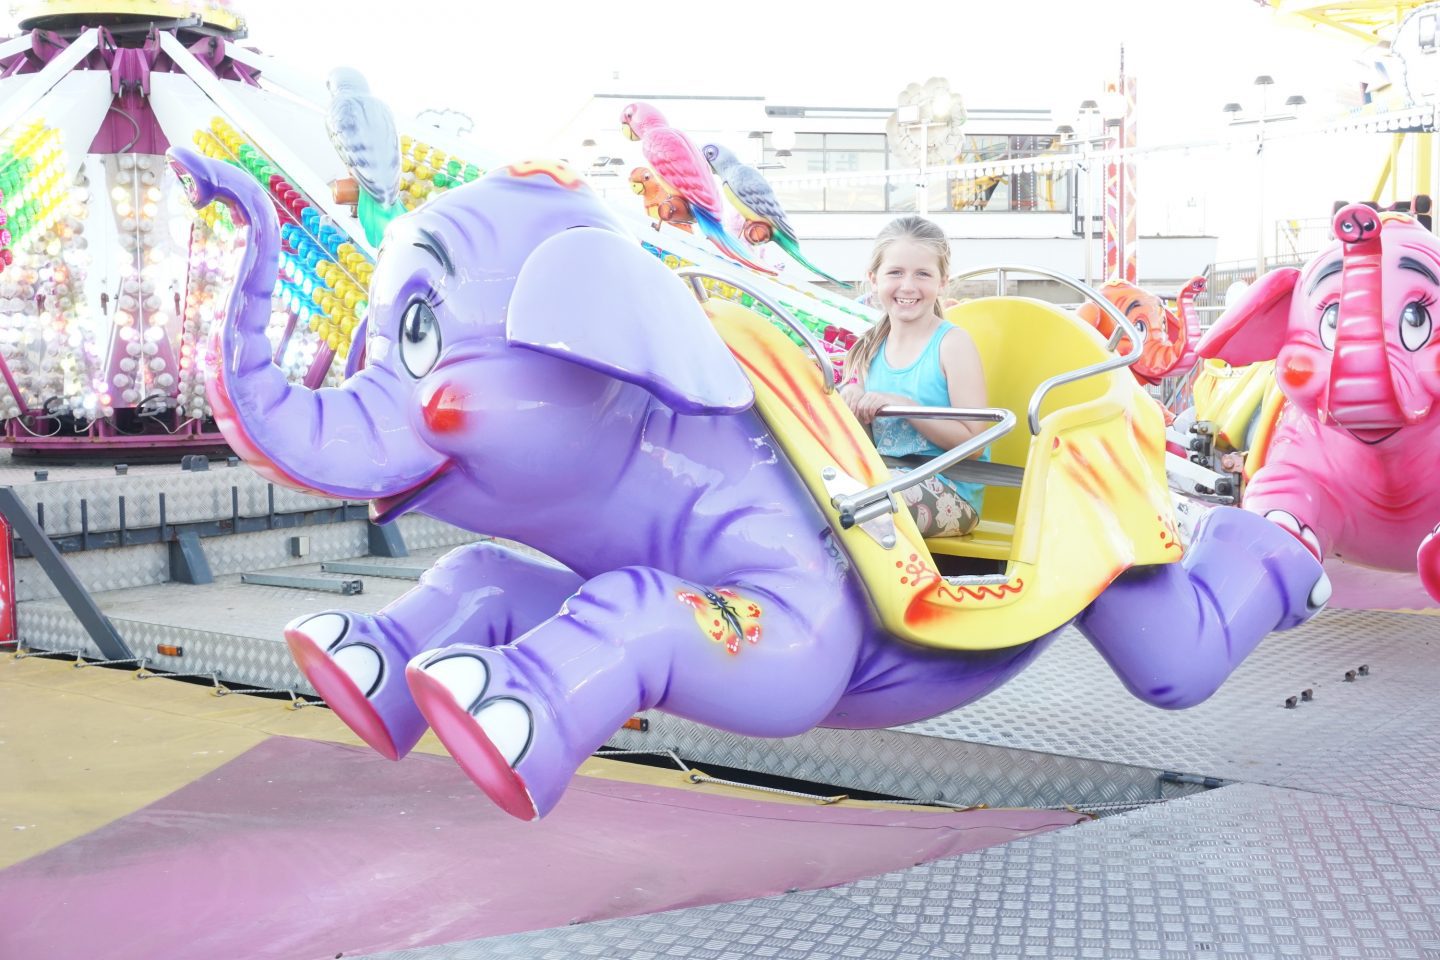 Girl on purple elephant on flying Dumbo ride at dog friendly Great Yarmouth Pleasure Beach